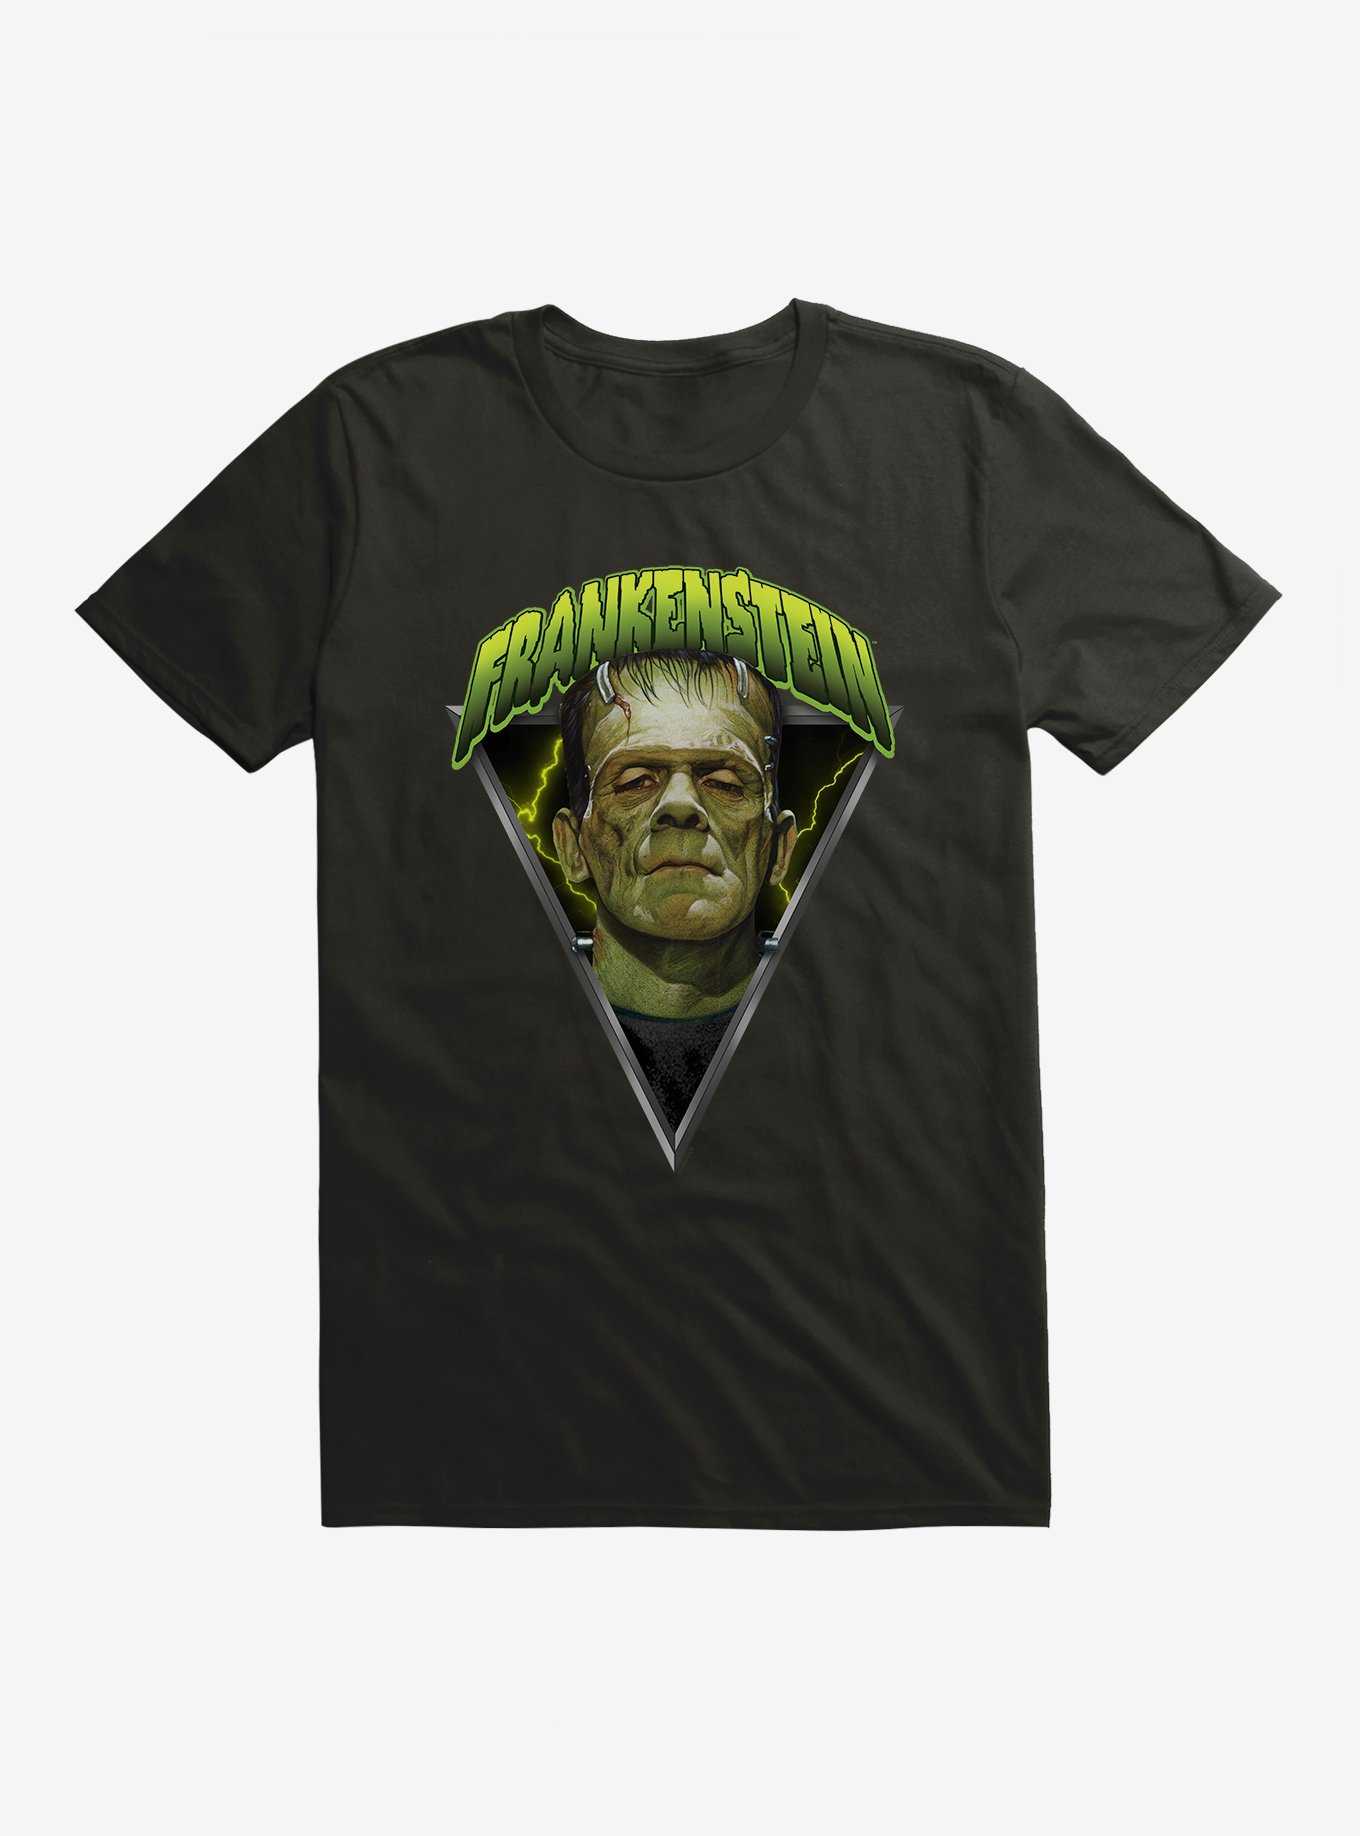 Universal Monsters Frankenstein Metal Portrait T-Shirt , , hi-res